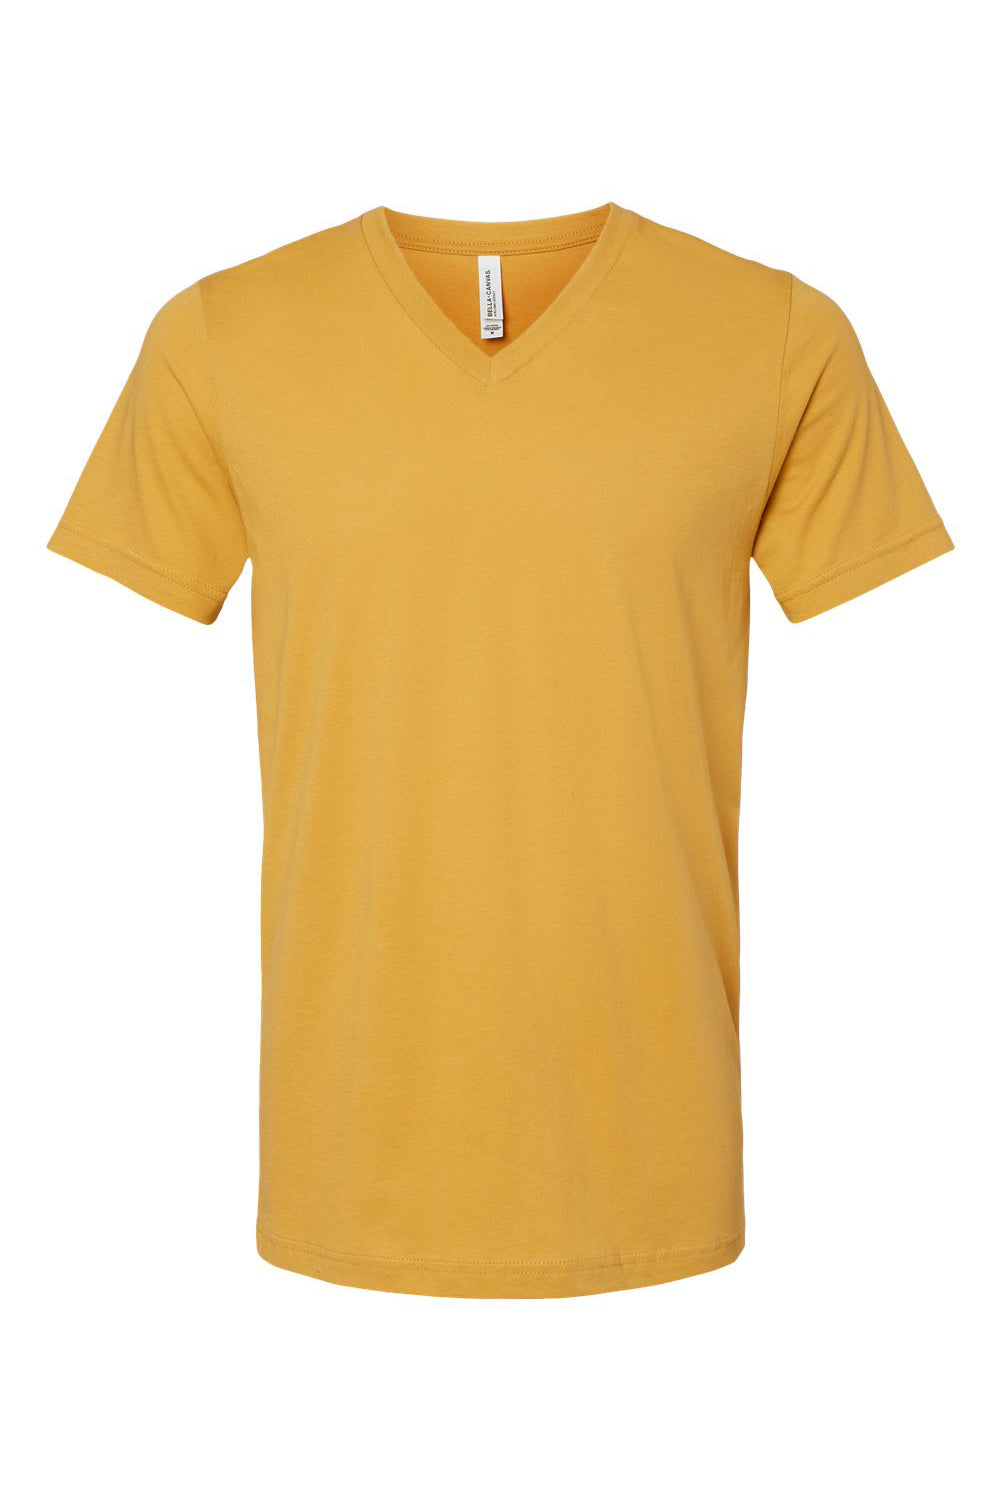 Bella + Canvas BC3005/3005/3655C Mens Jersey Short Sleeve V-Neck T-Shirt Mustard Yellow Flat Front